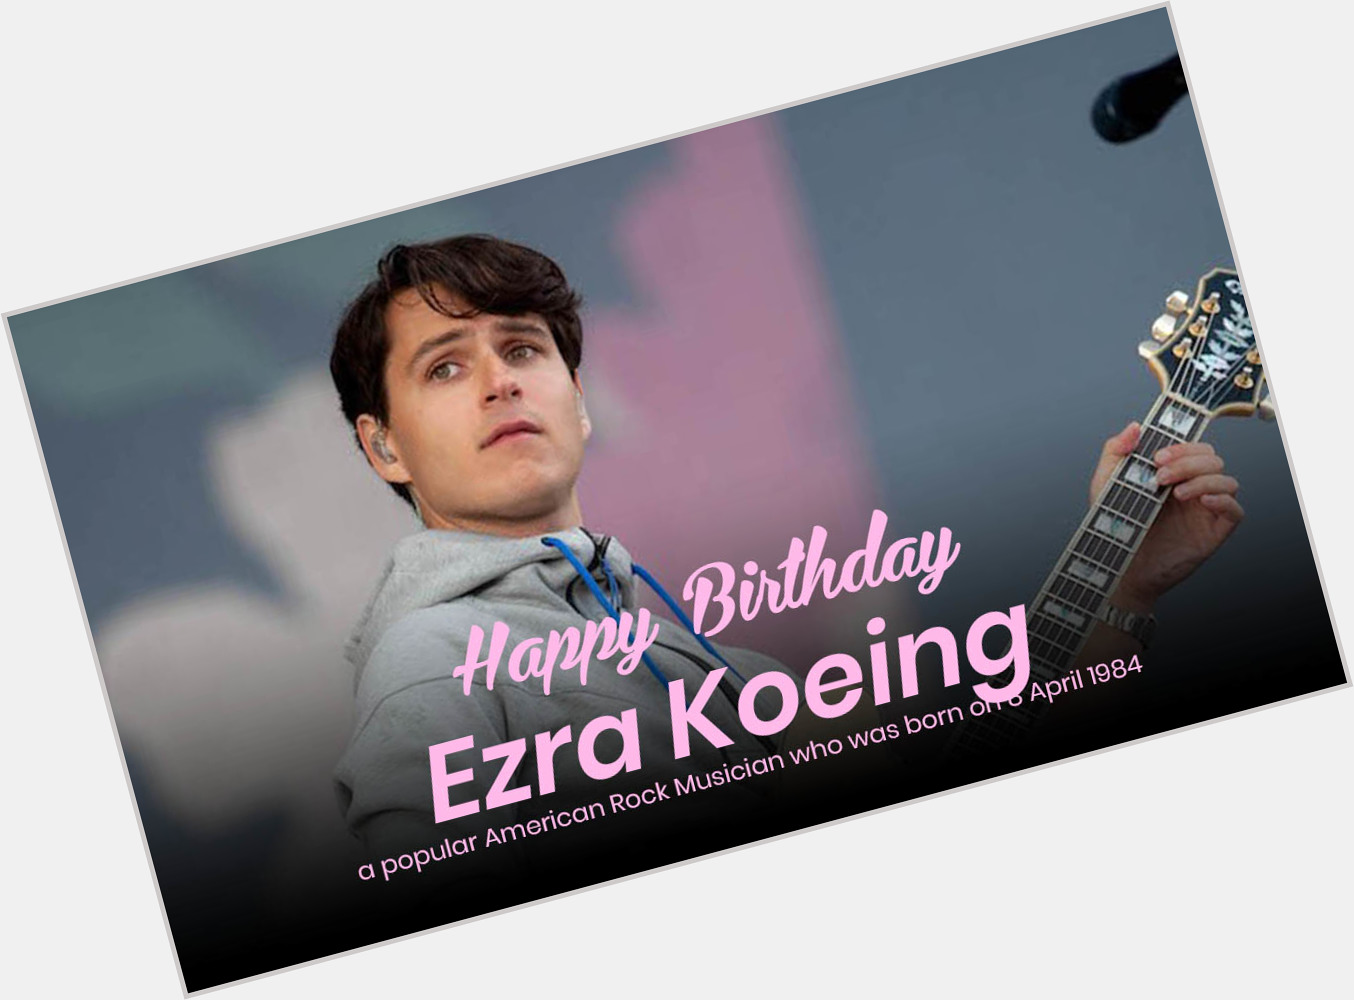 Happy Birthday to  Ezra Koenig, a popular American Rock Musician who was born on 8 April 1984. 